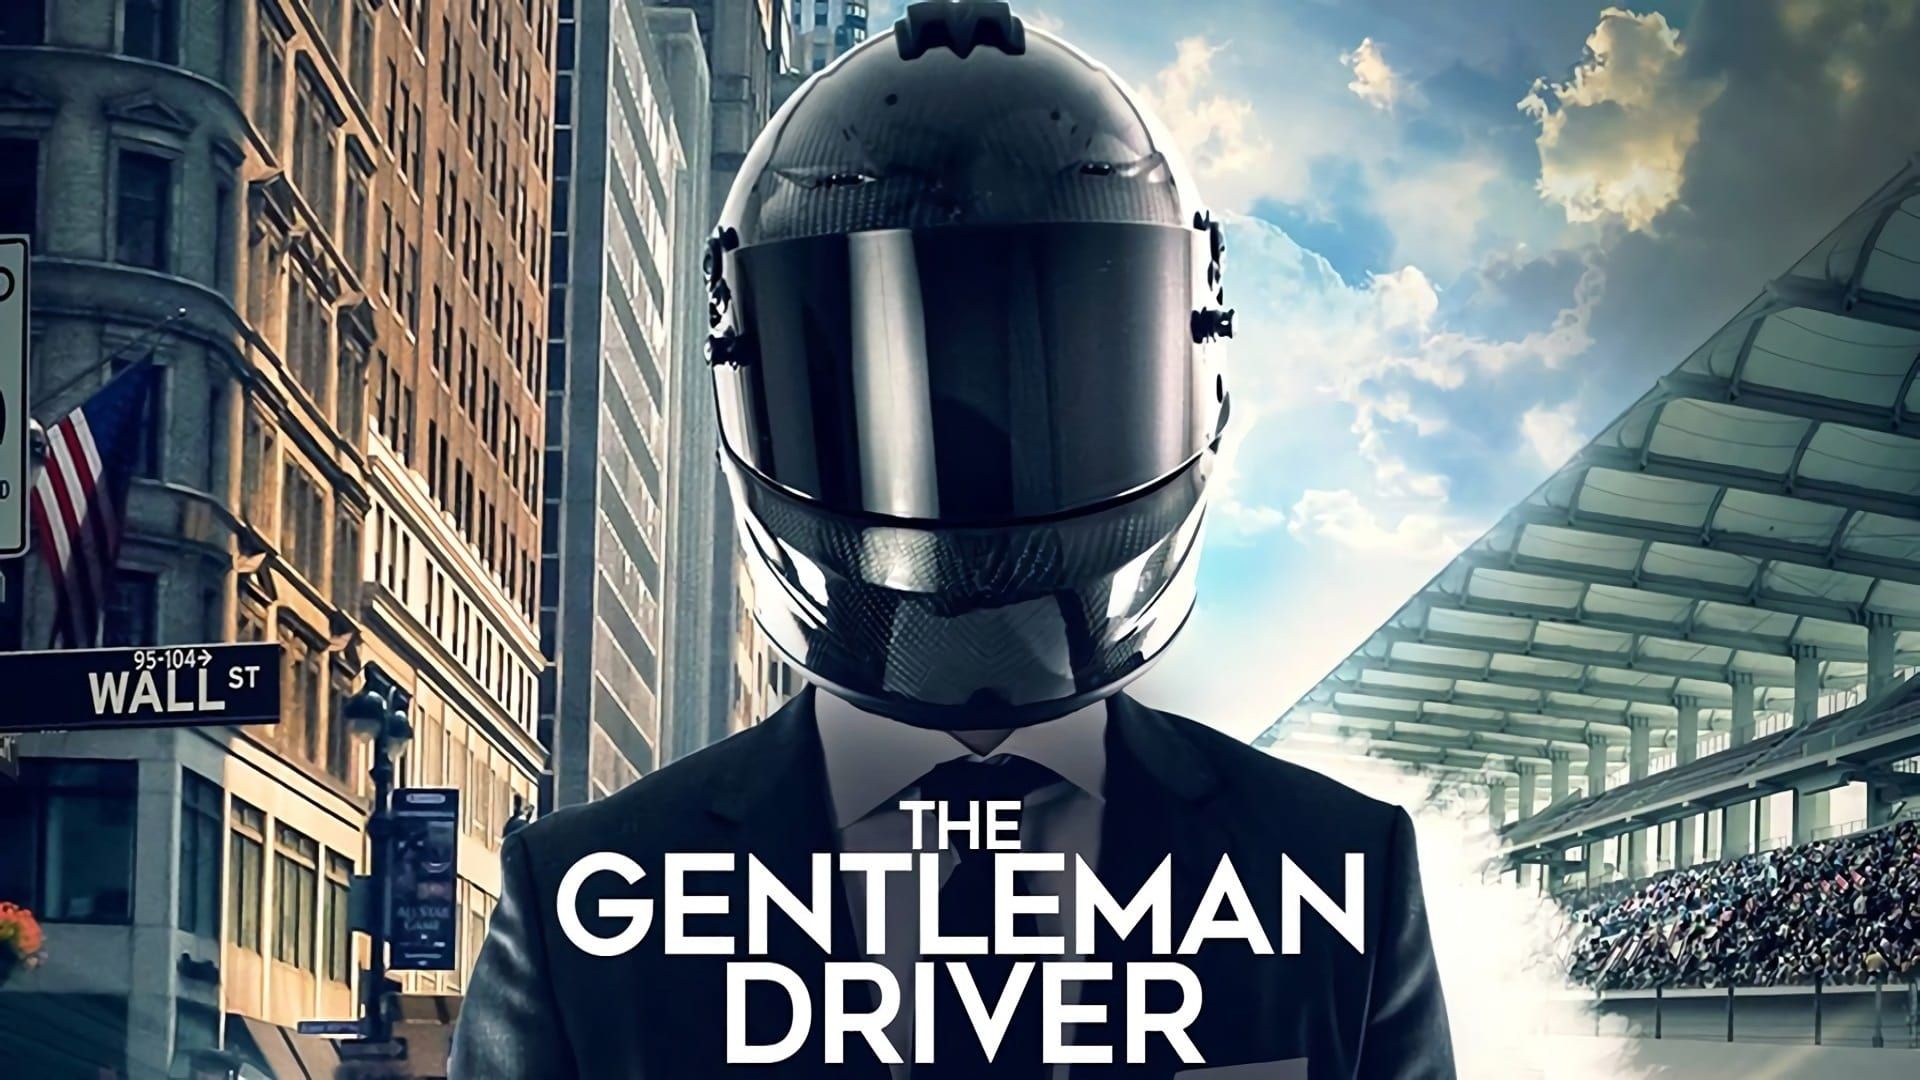 The Gentleman Driver background